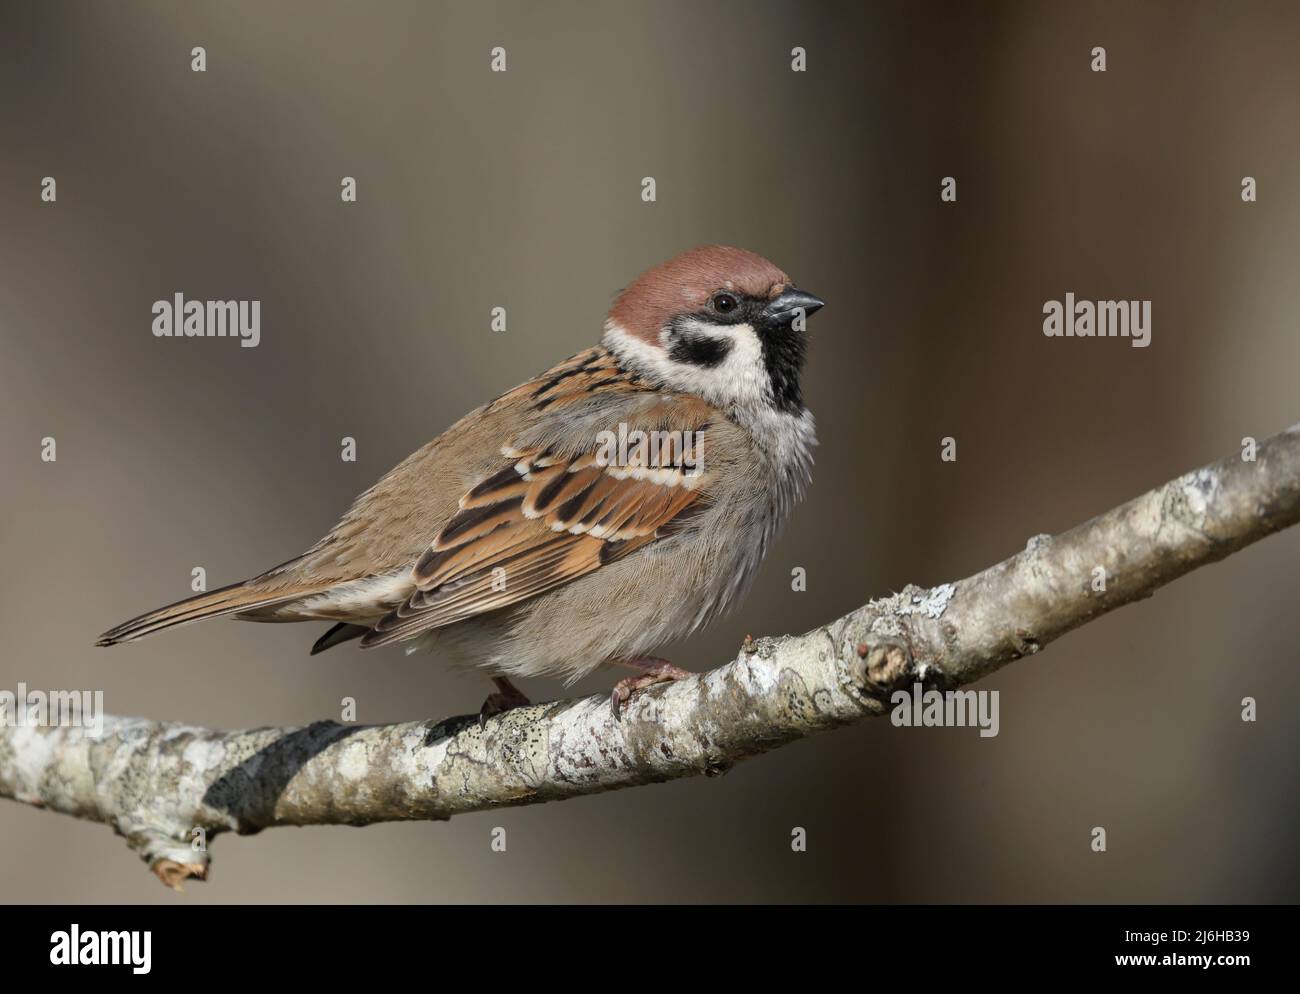 Eurasian tree sparrow, Passer montanus sitting on perch, clean background Stock Photo